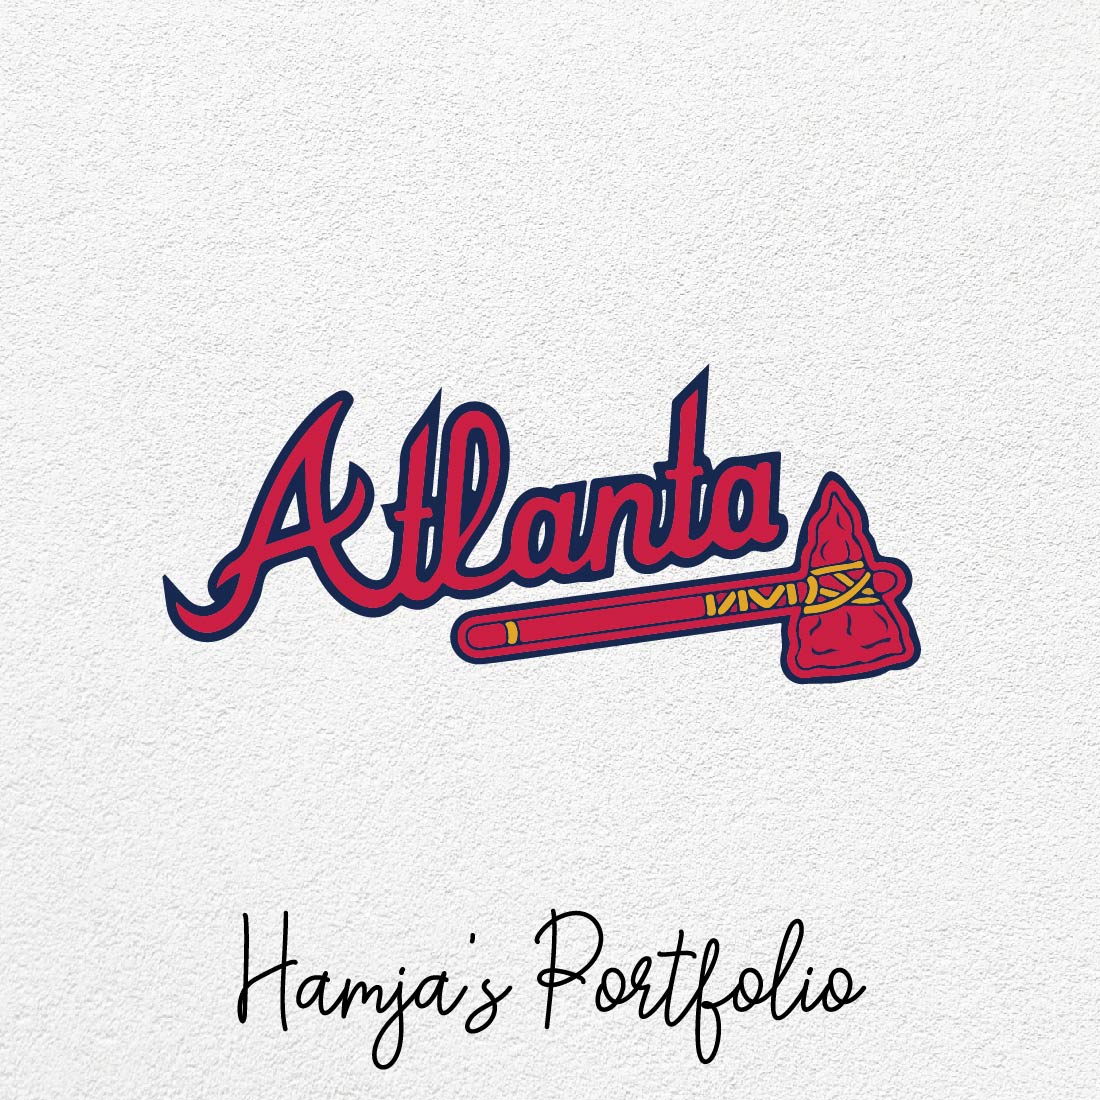 Atlanta Braves Logo Vector Set cover image.